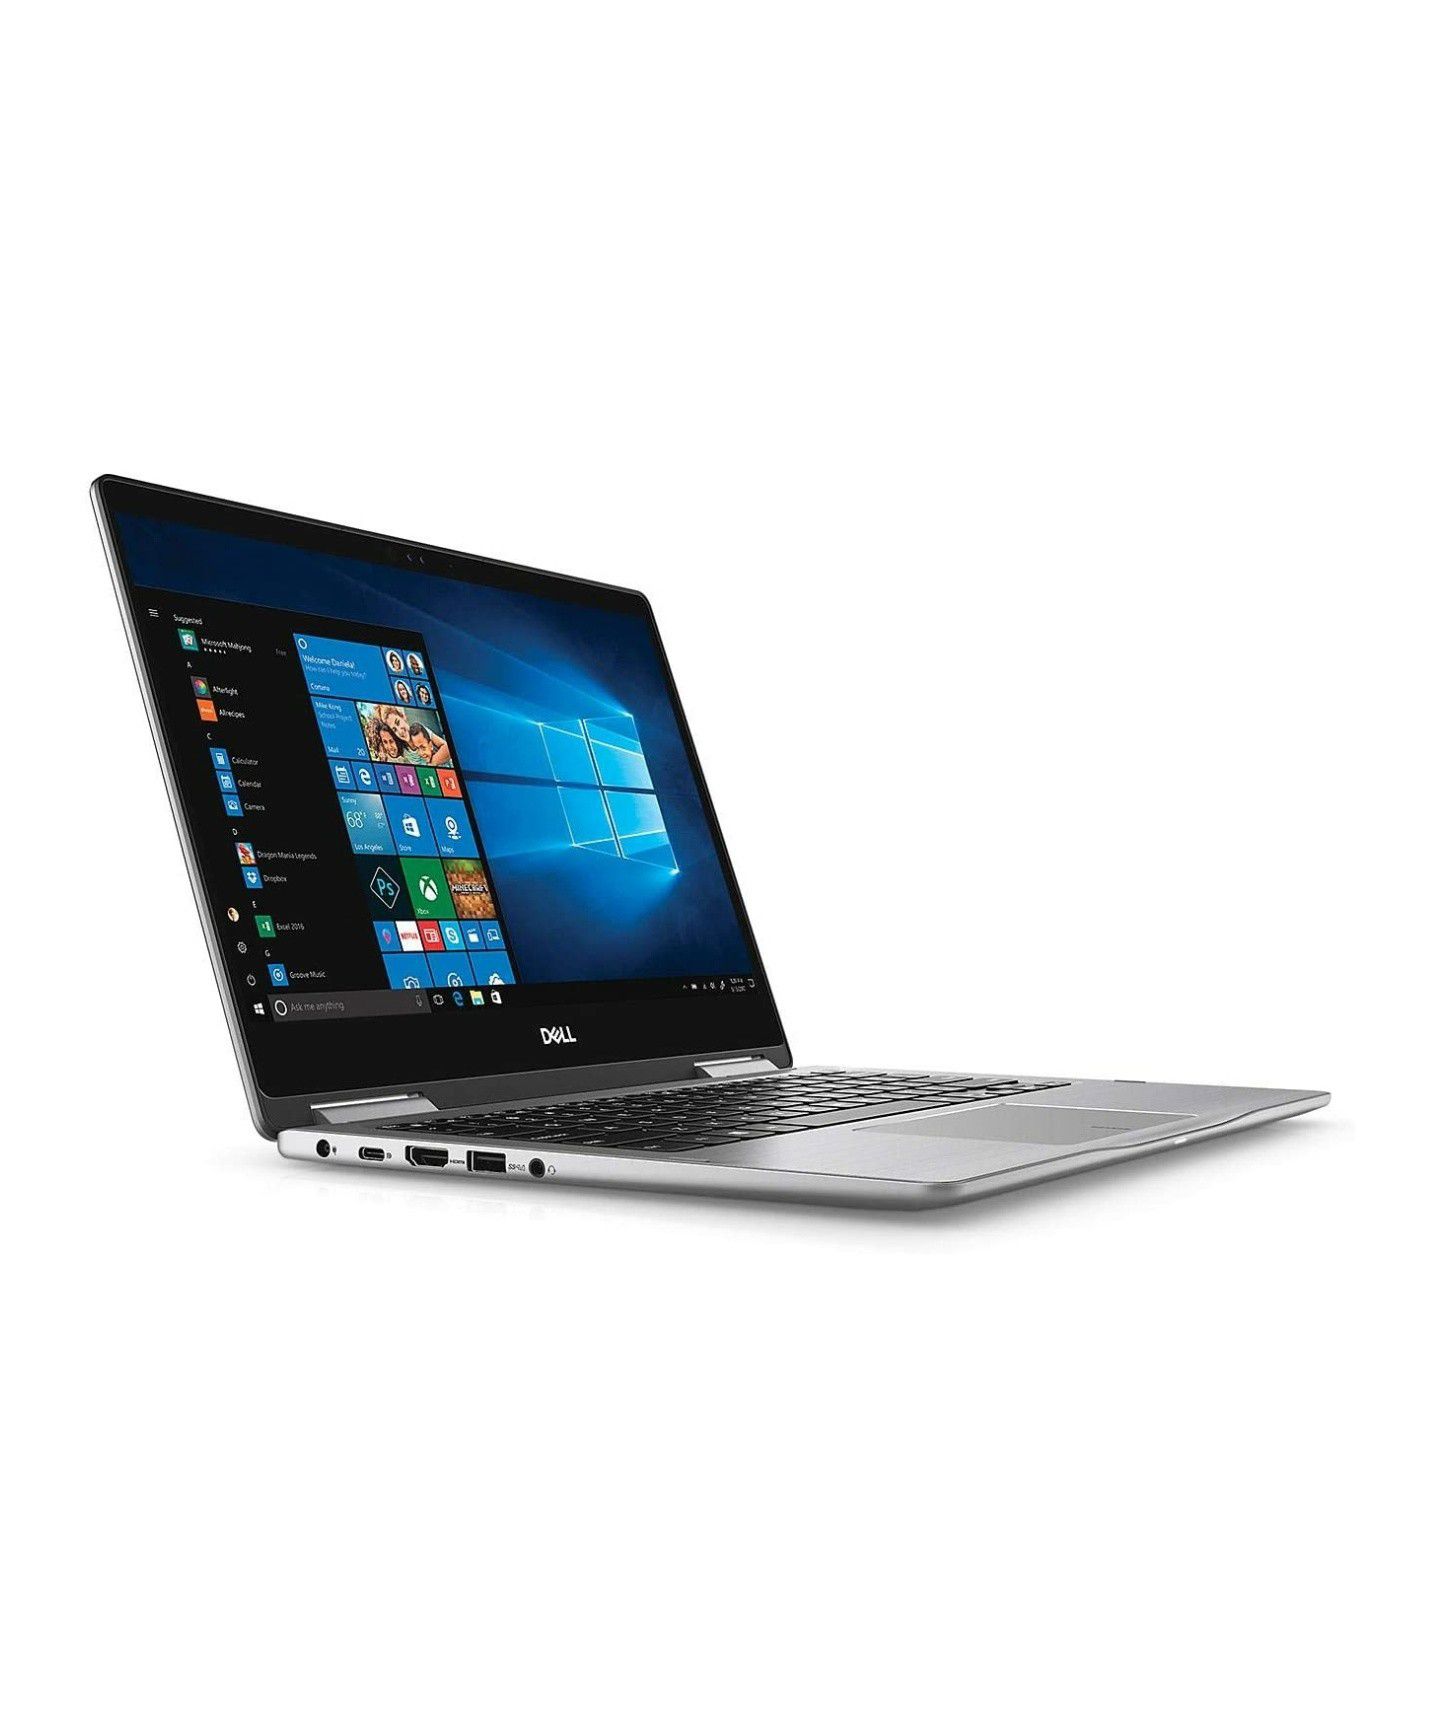 Dell Inspiron 13 7000 2-in-1 Laptop. 8GB Ram, 256GB SSD, Core i5 8th Gen.